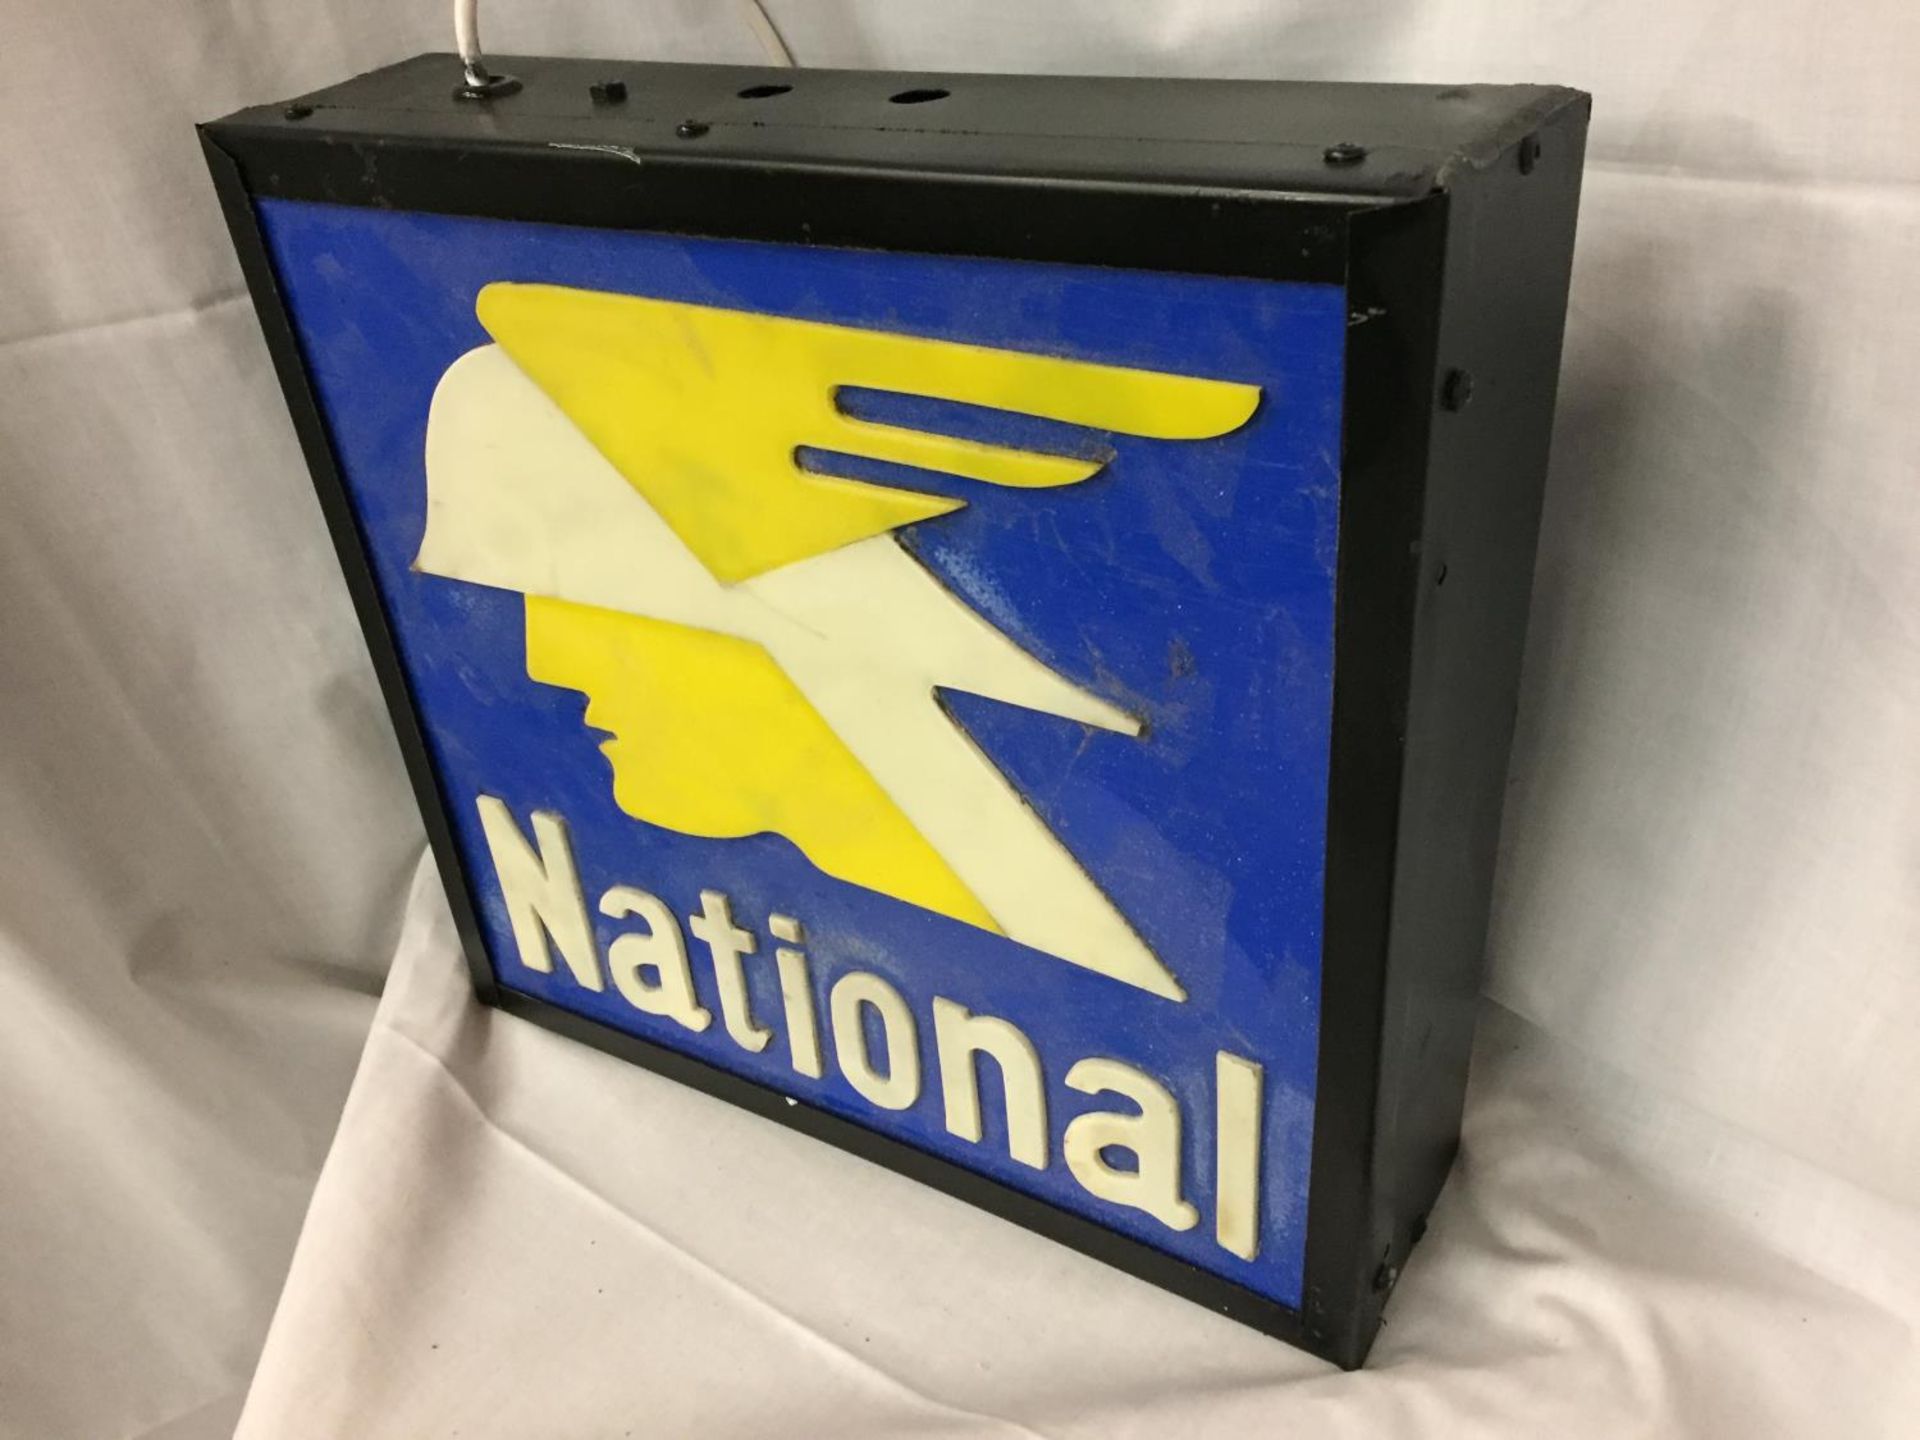 A NATIONAL ILLUMINATED LIGHT BOX SIGN - Image 2 of 3